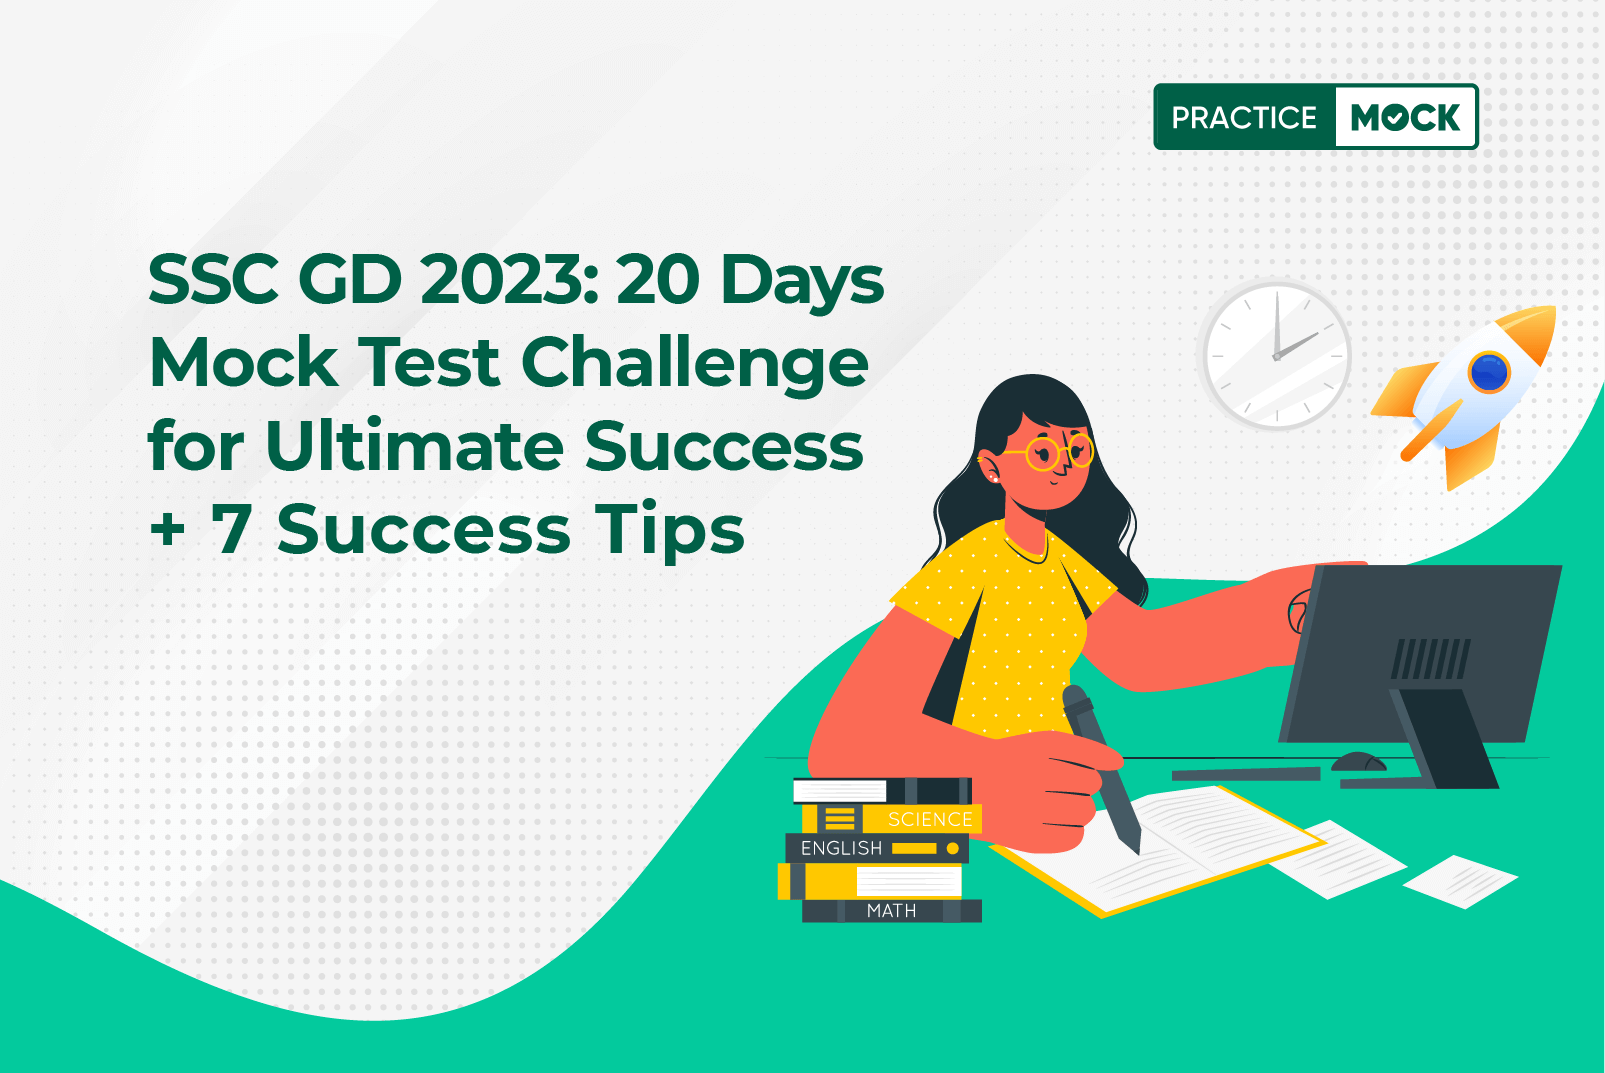 SSC GD 2023: 20 Days Mock Test Challenge for Ultimate Success + 7 Success Tips